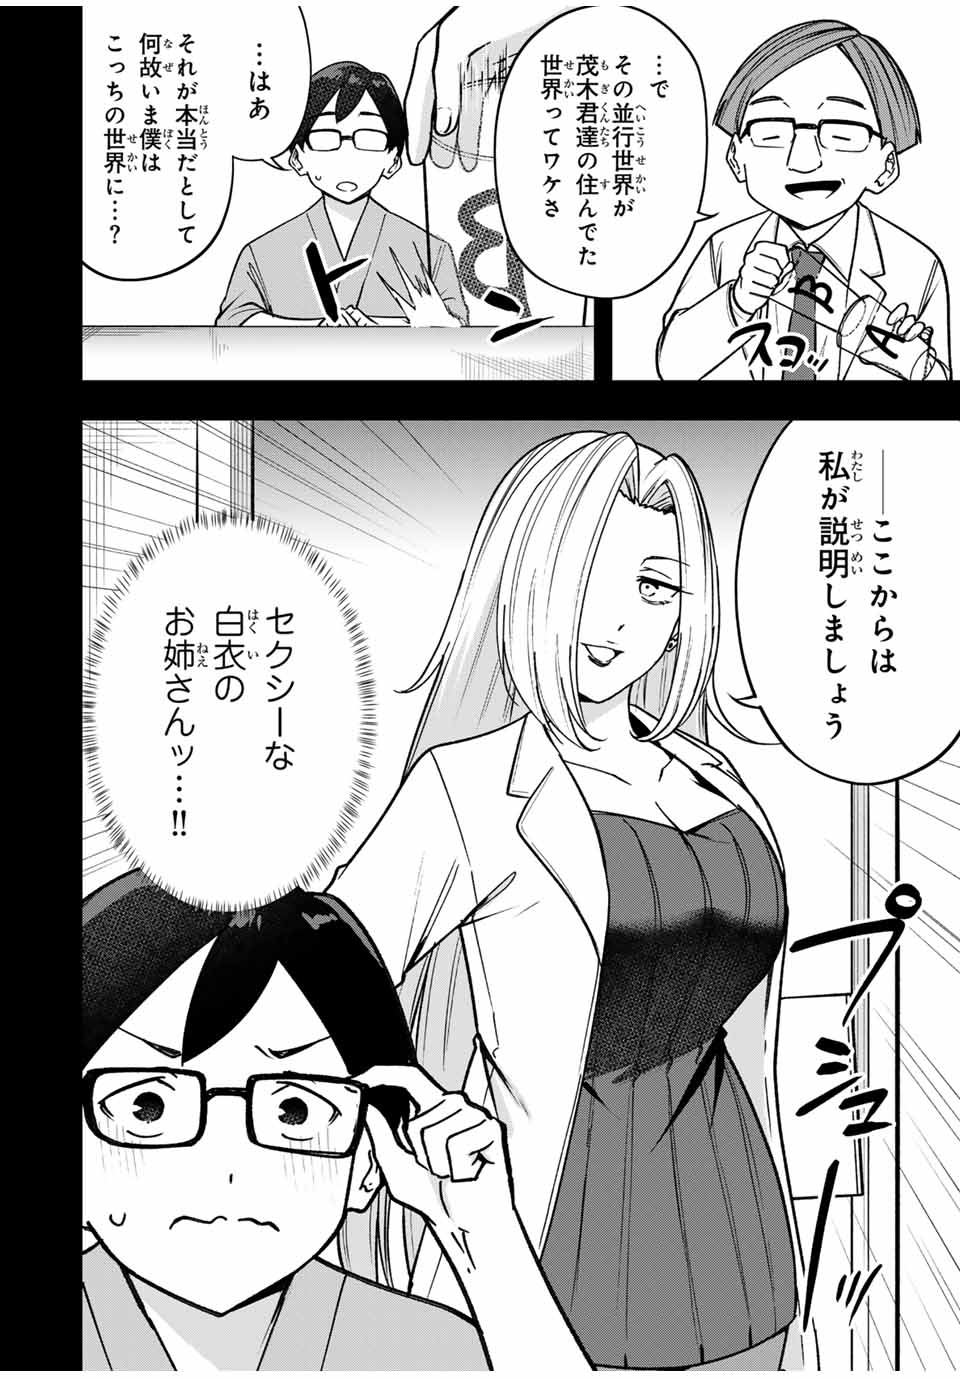 Heroine wa xx Okasegitai - Chapter 9 - Page 16